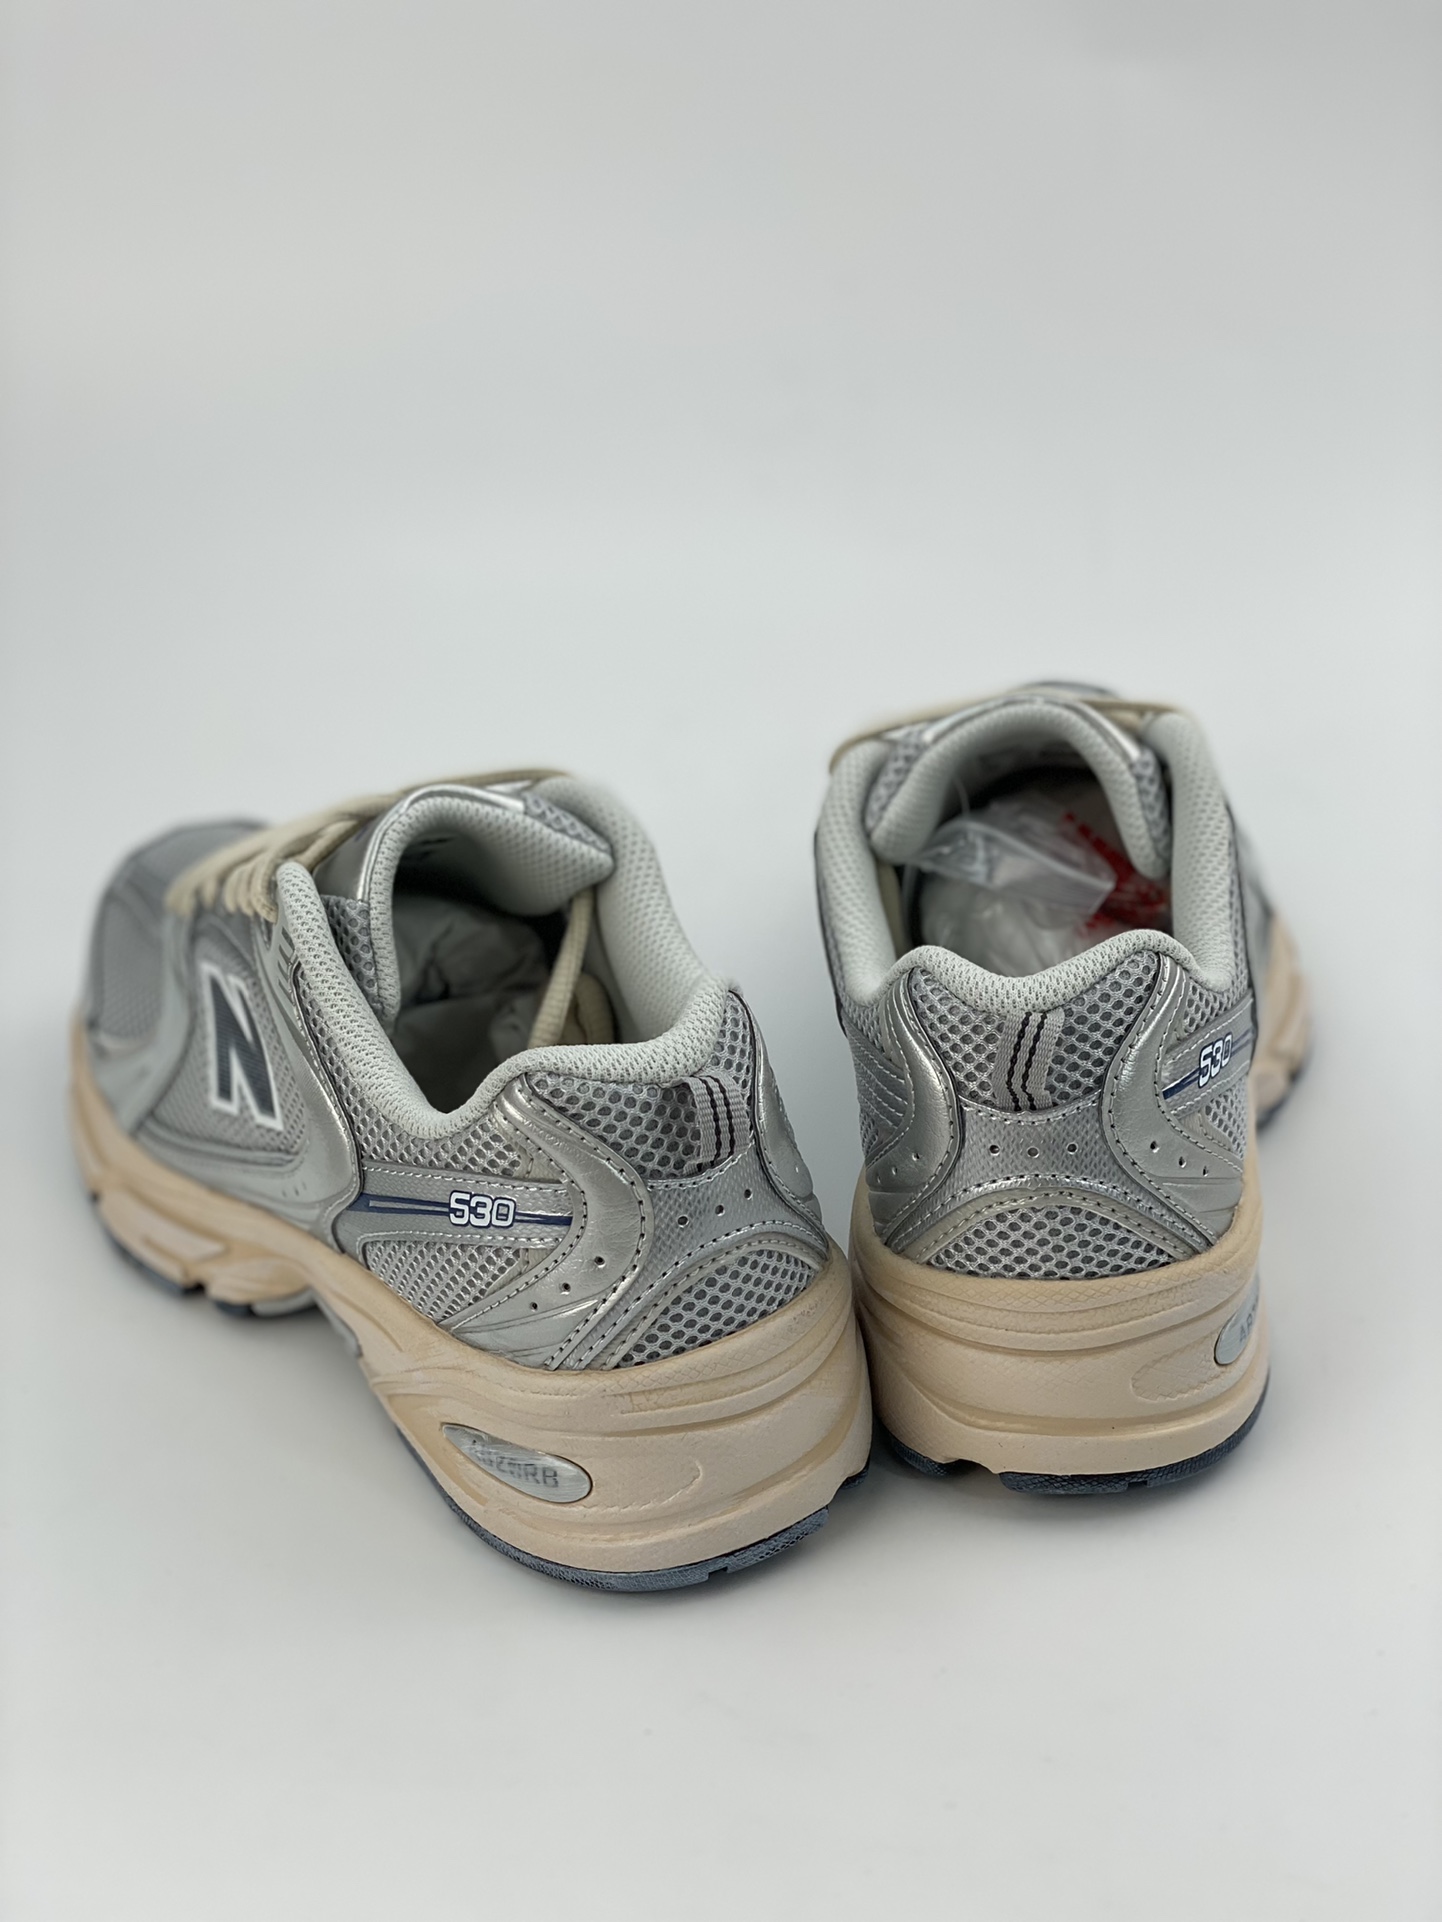 New Balance 530 Retro Running Shoes MR530VS